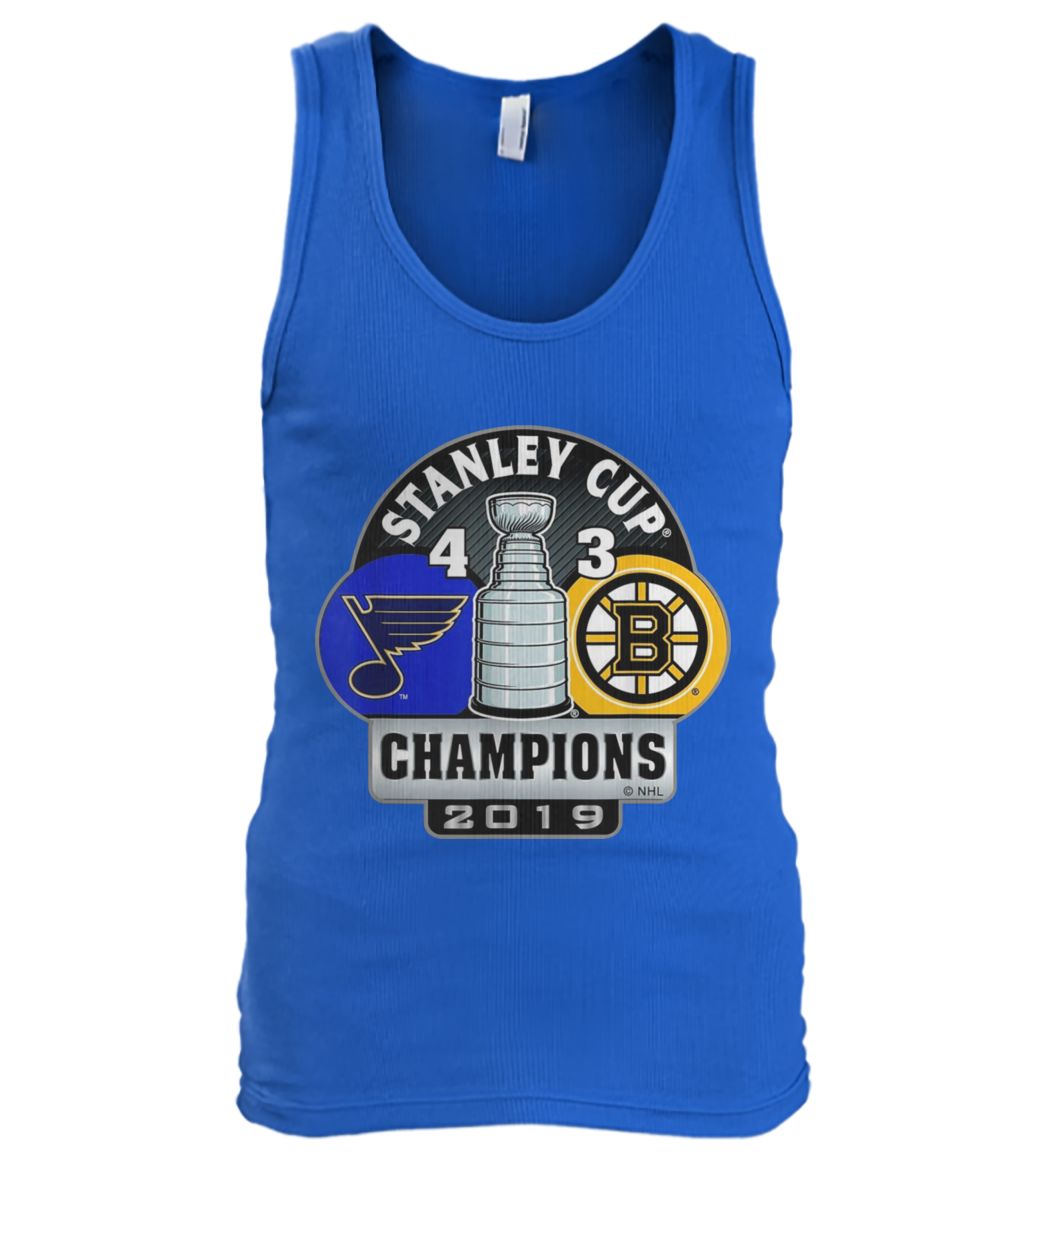 Stanley cup champions st louis blues 4 3 boston bruins 2019 men's tank top